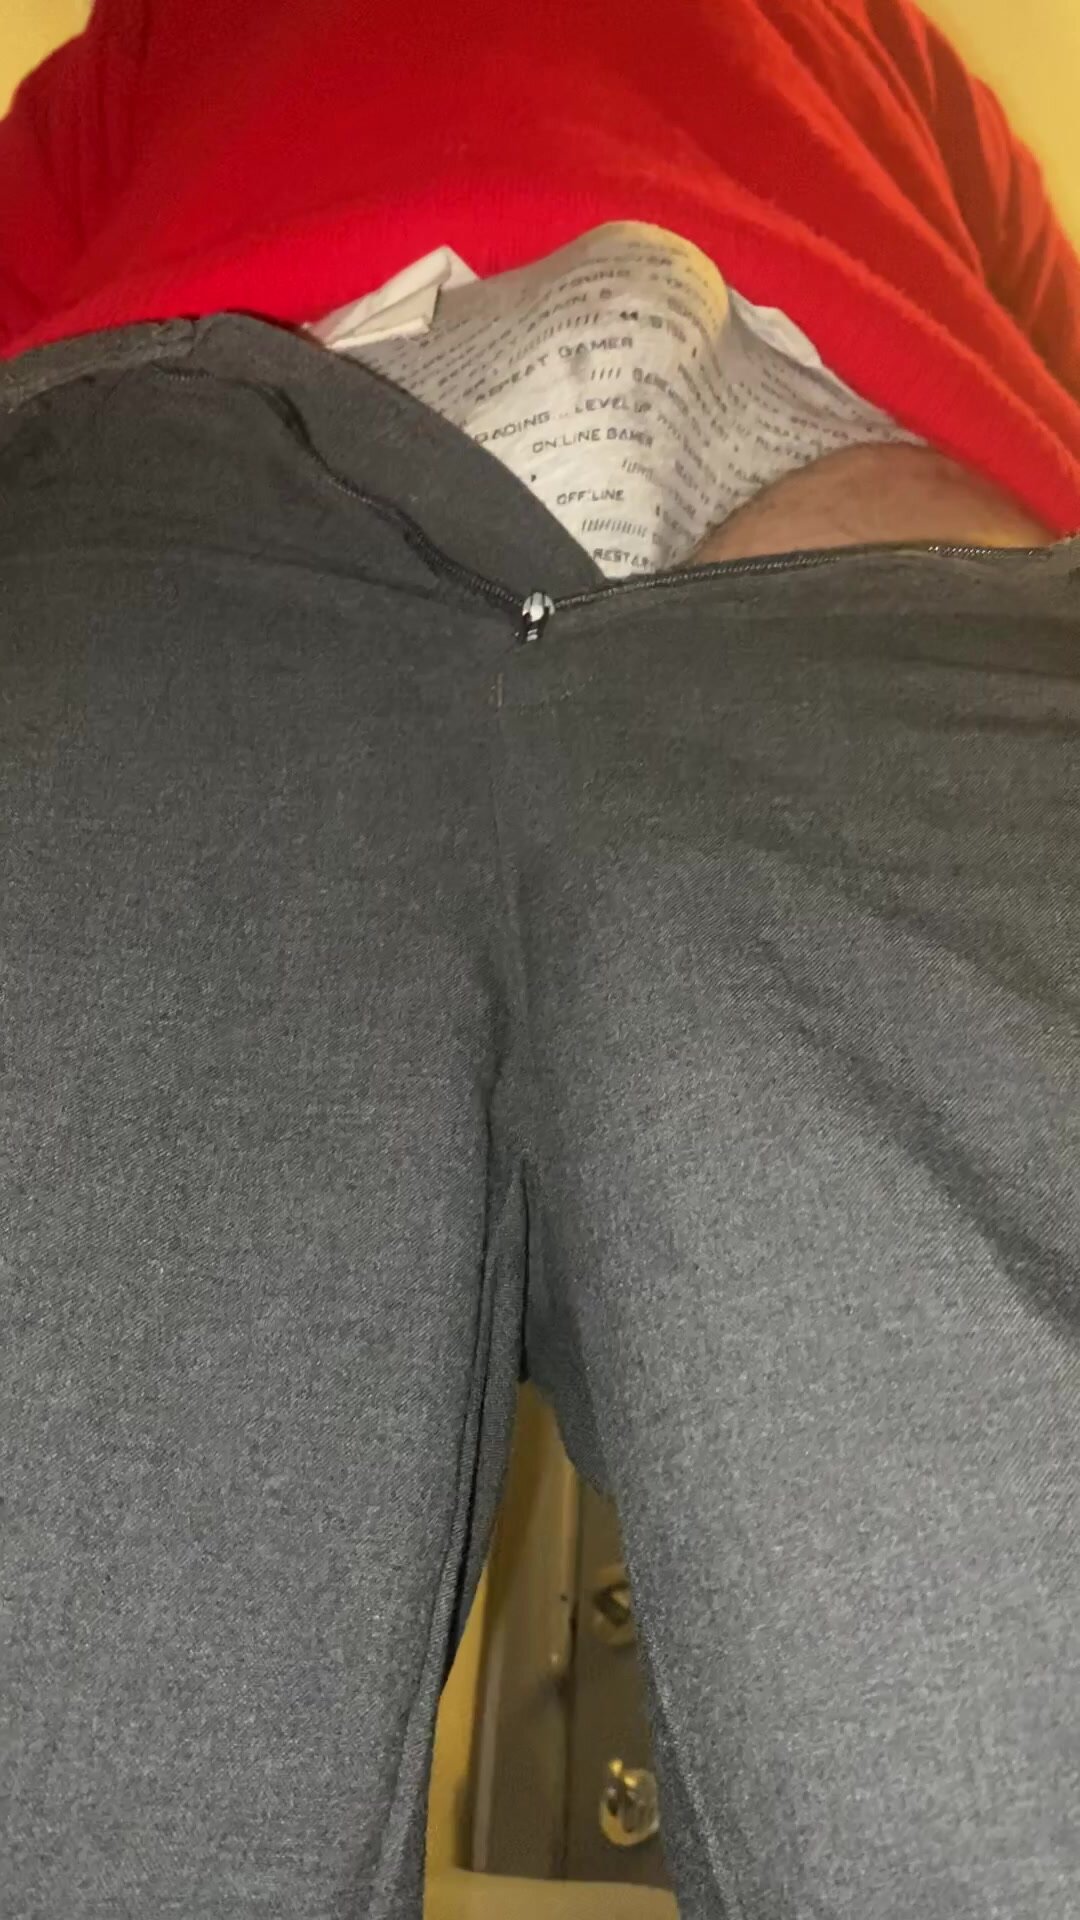 Small leak in my pants